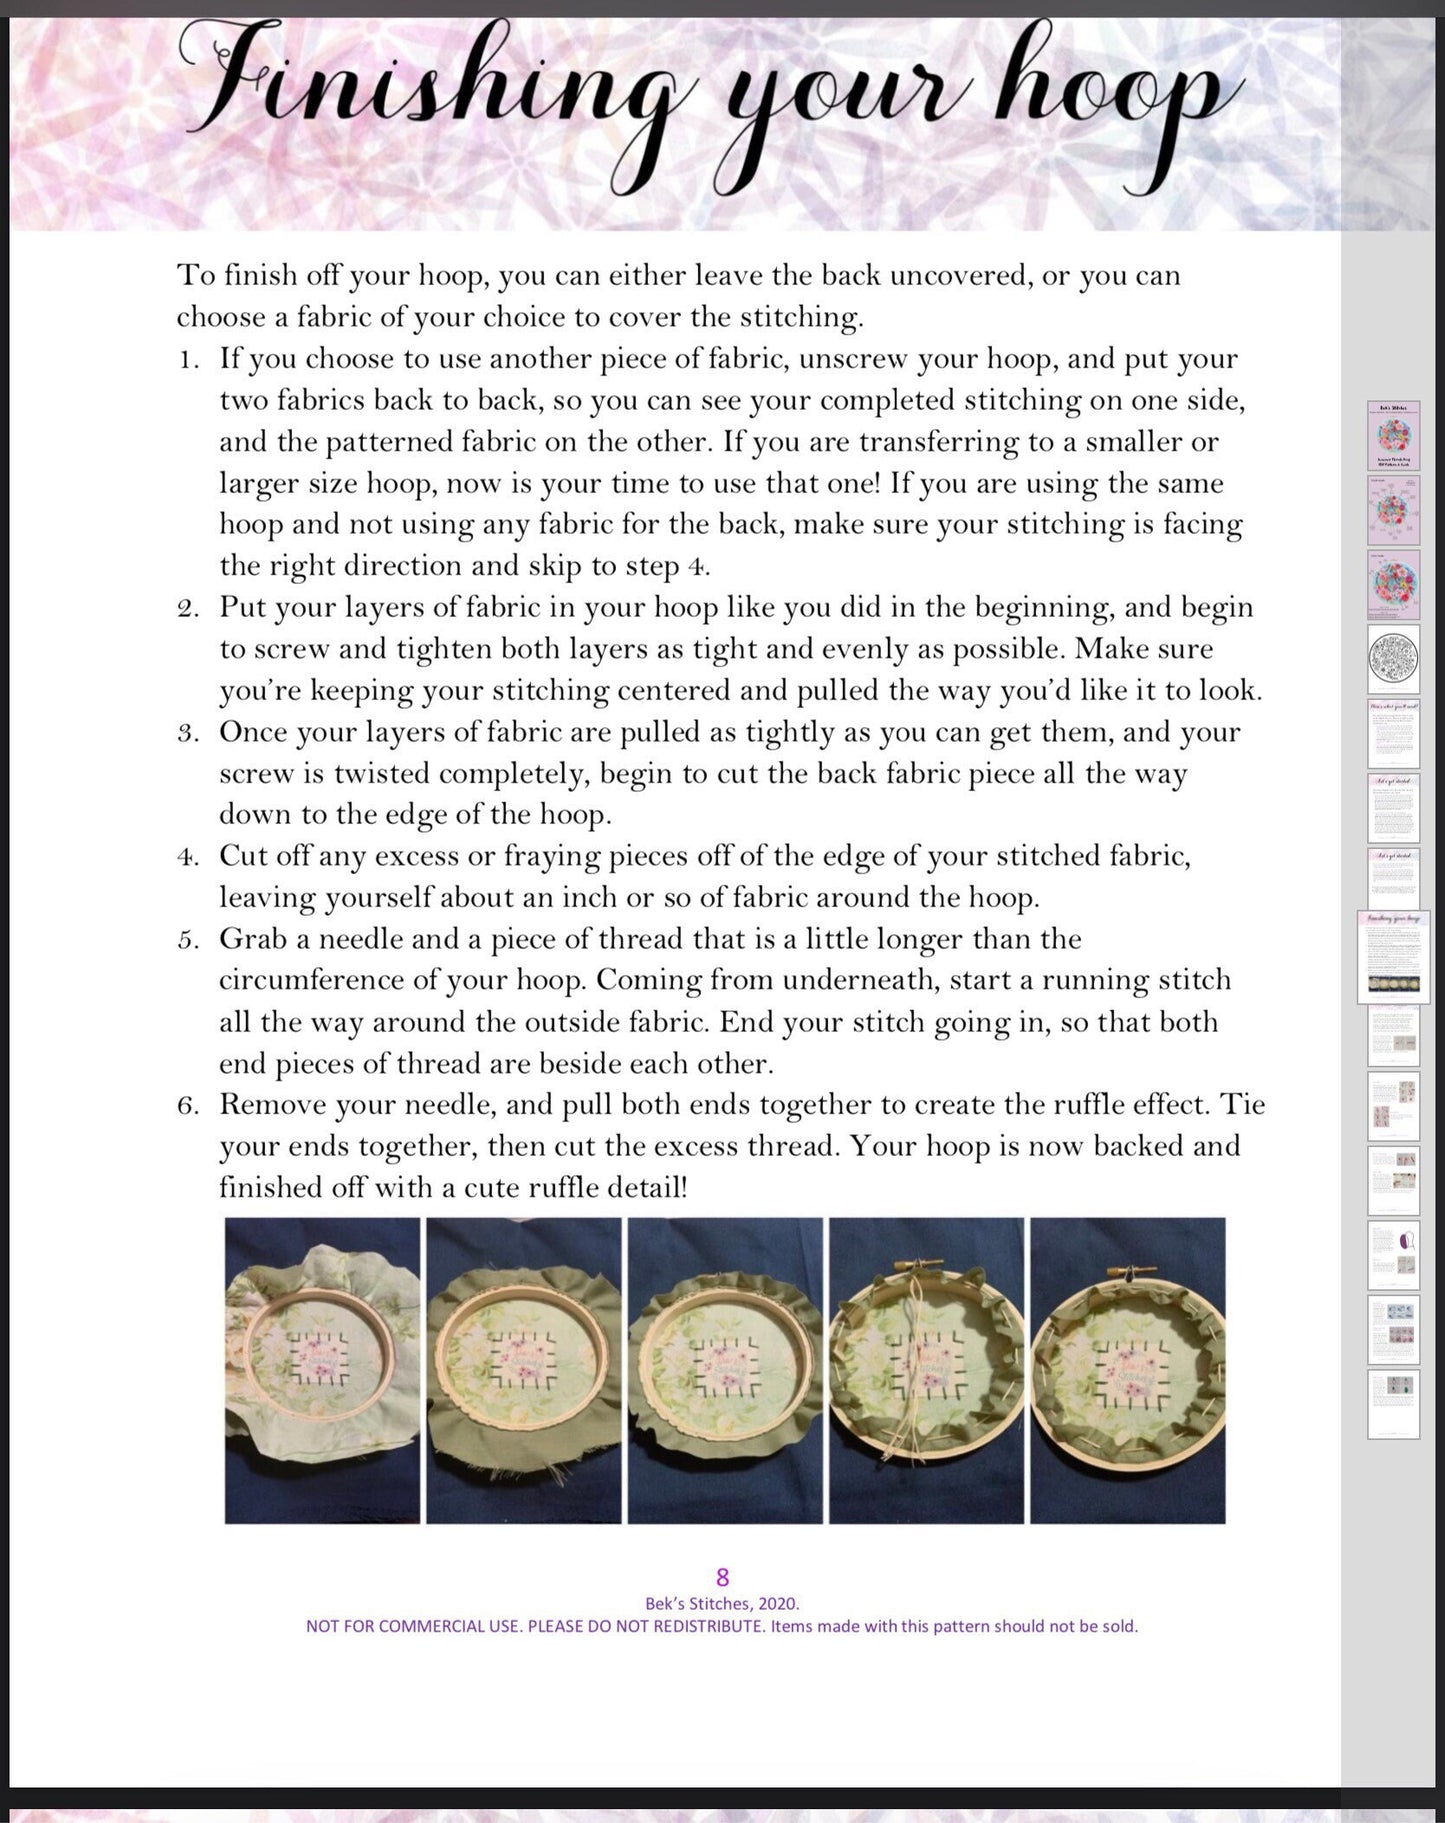 PDF Pattern - Summer Florals, Intermediate/Advanced Embroidery Pattern